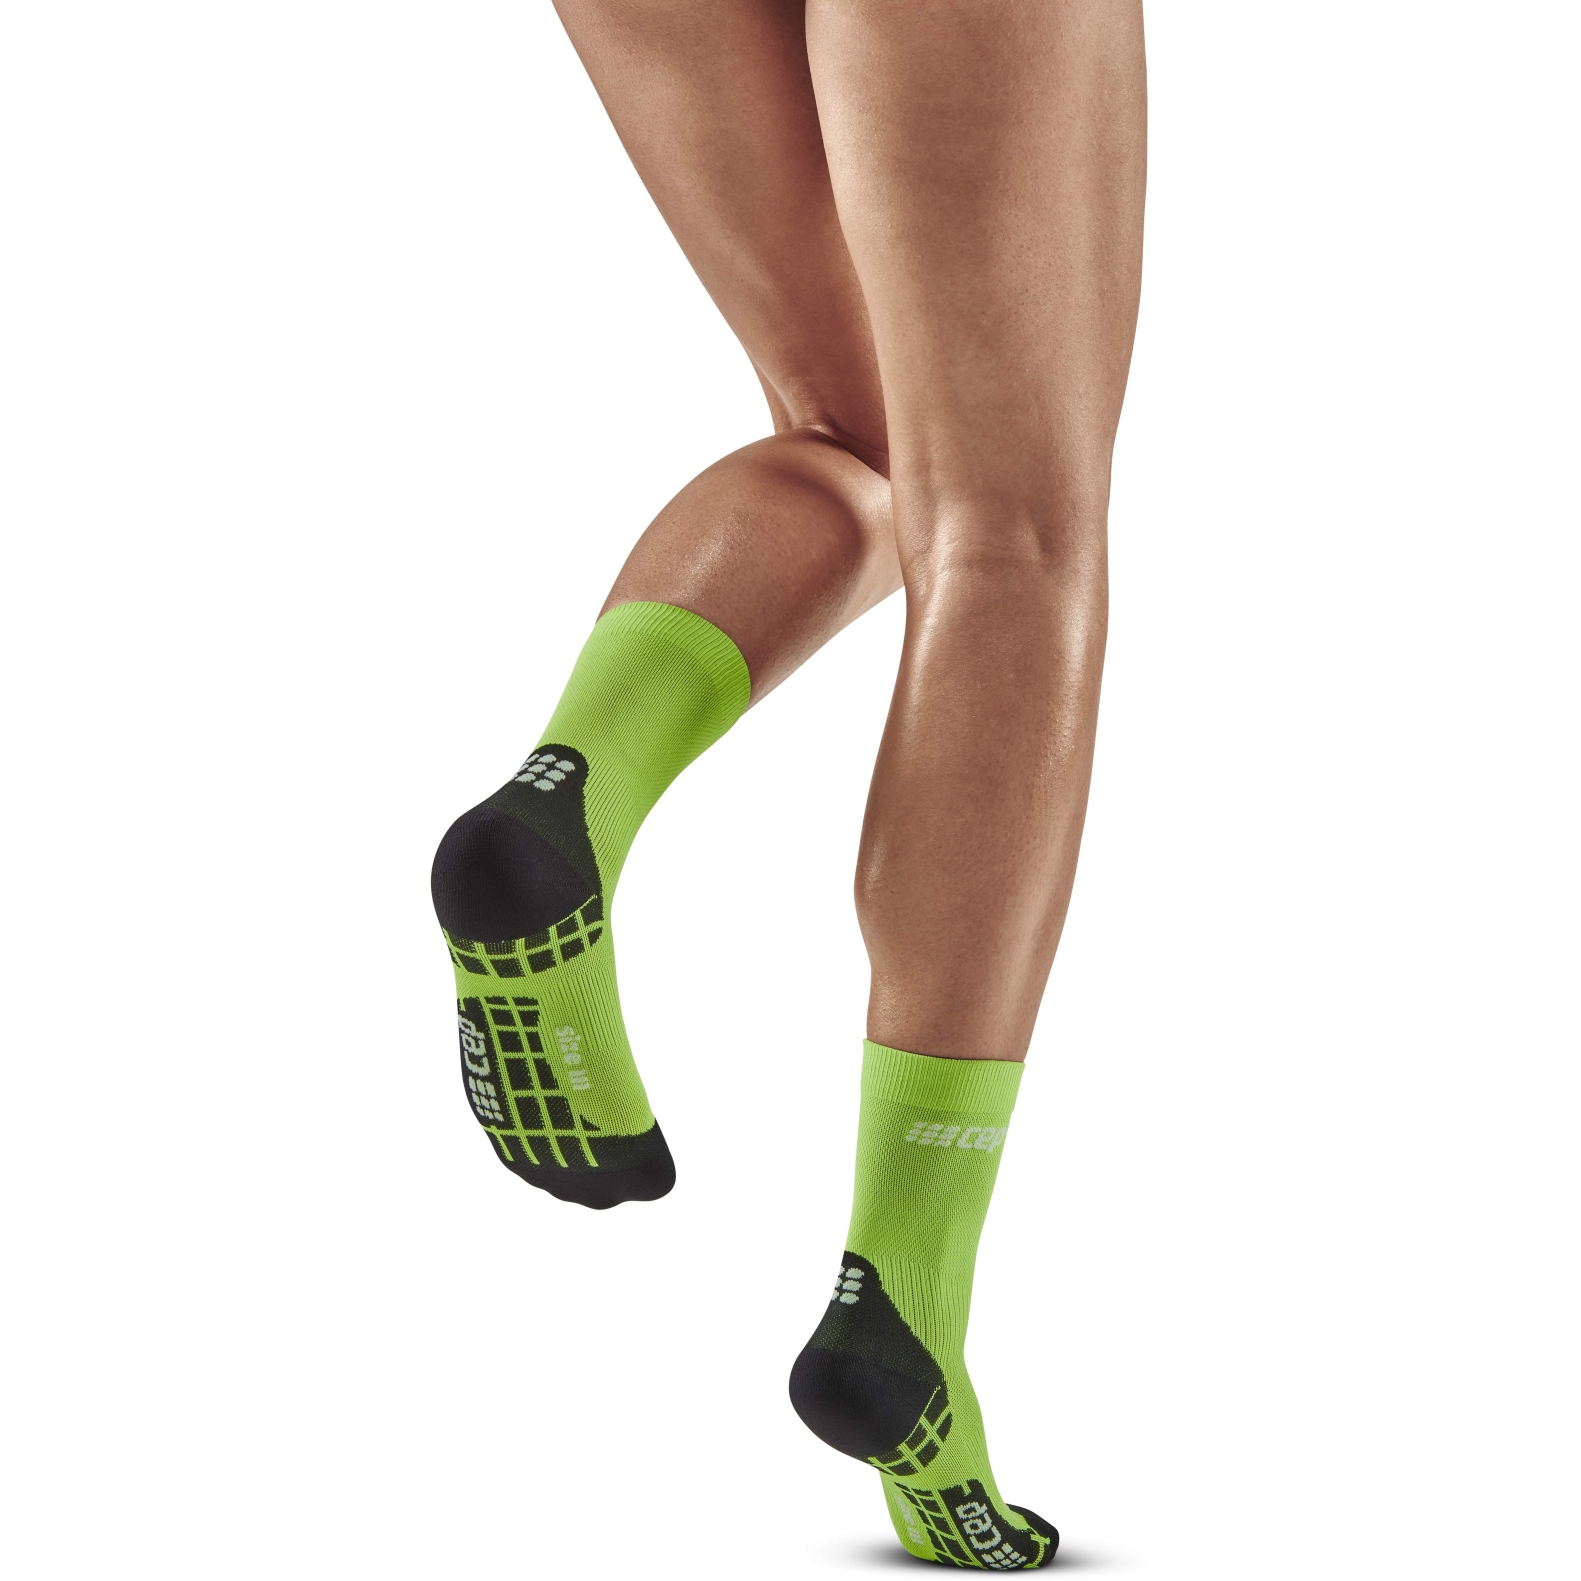 https://images.bike24.com/i/mb/b3/b9/5d/cep-ultralight-short-compression-socks-women-flash-green-black-1-1554429.jpg